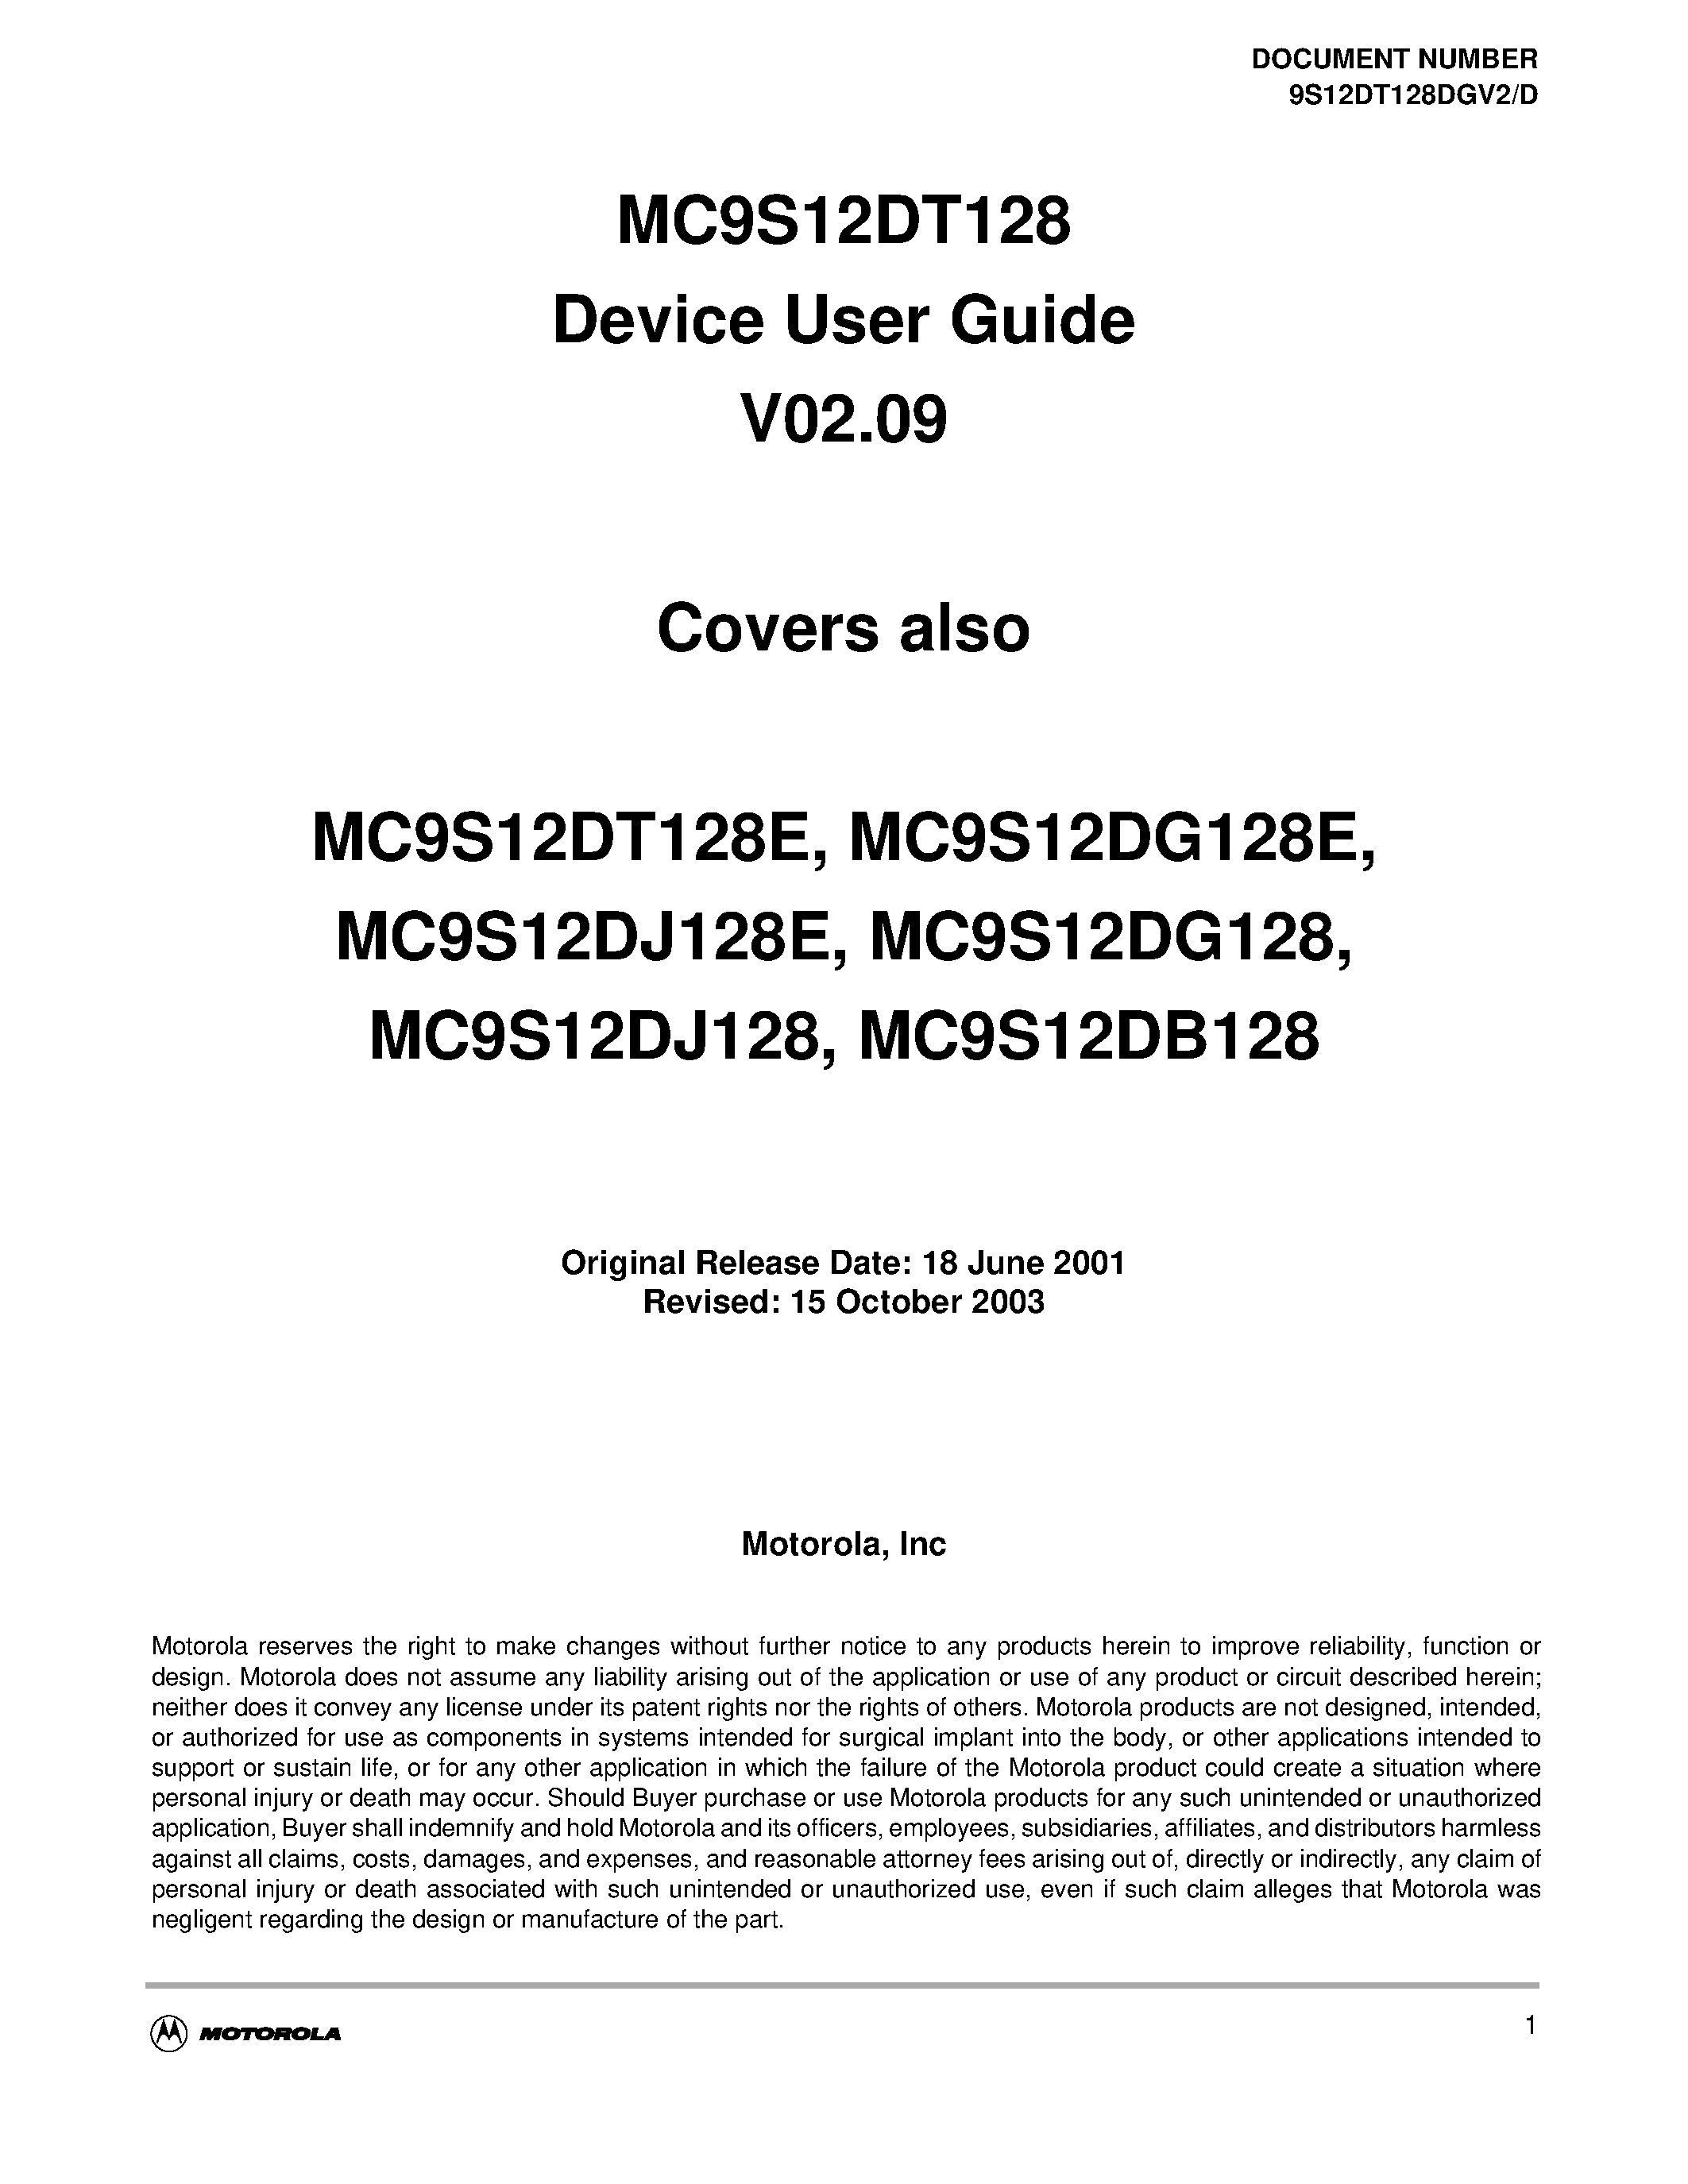 Datasheet S12MEBIV3D - MC9S12DT128 Device User Guide V02.09 page 1